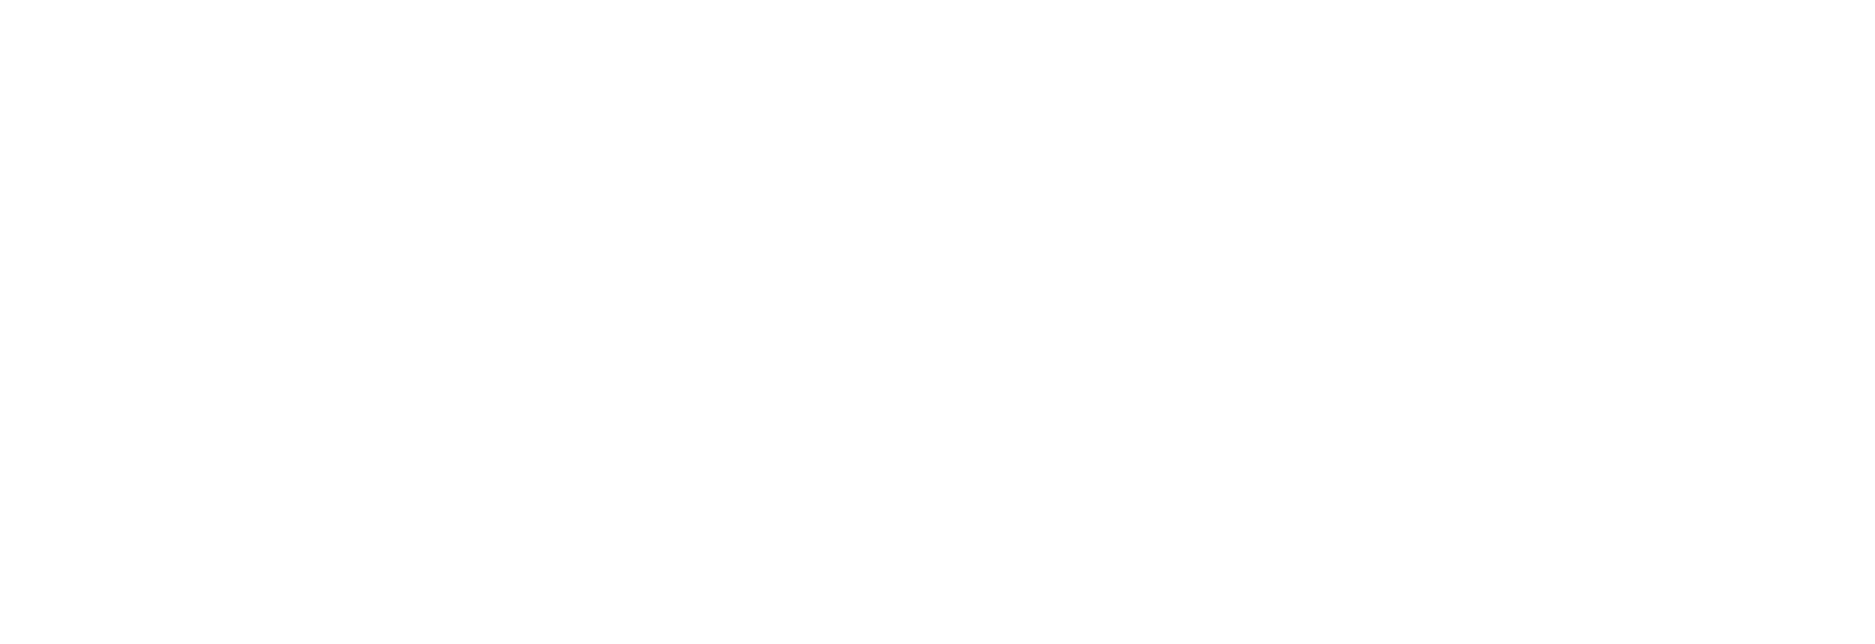 CBLJ Awards Gallery 3